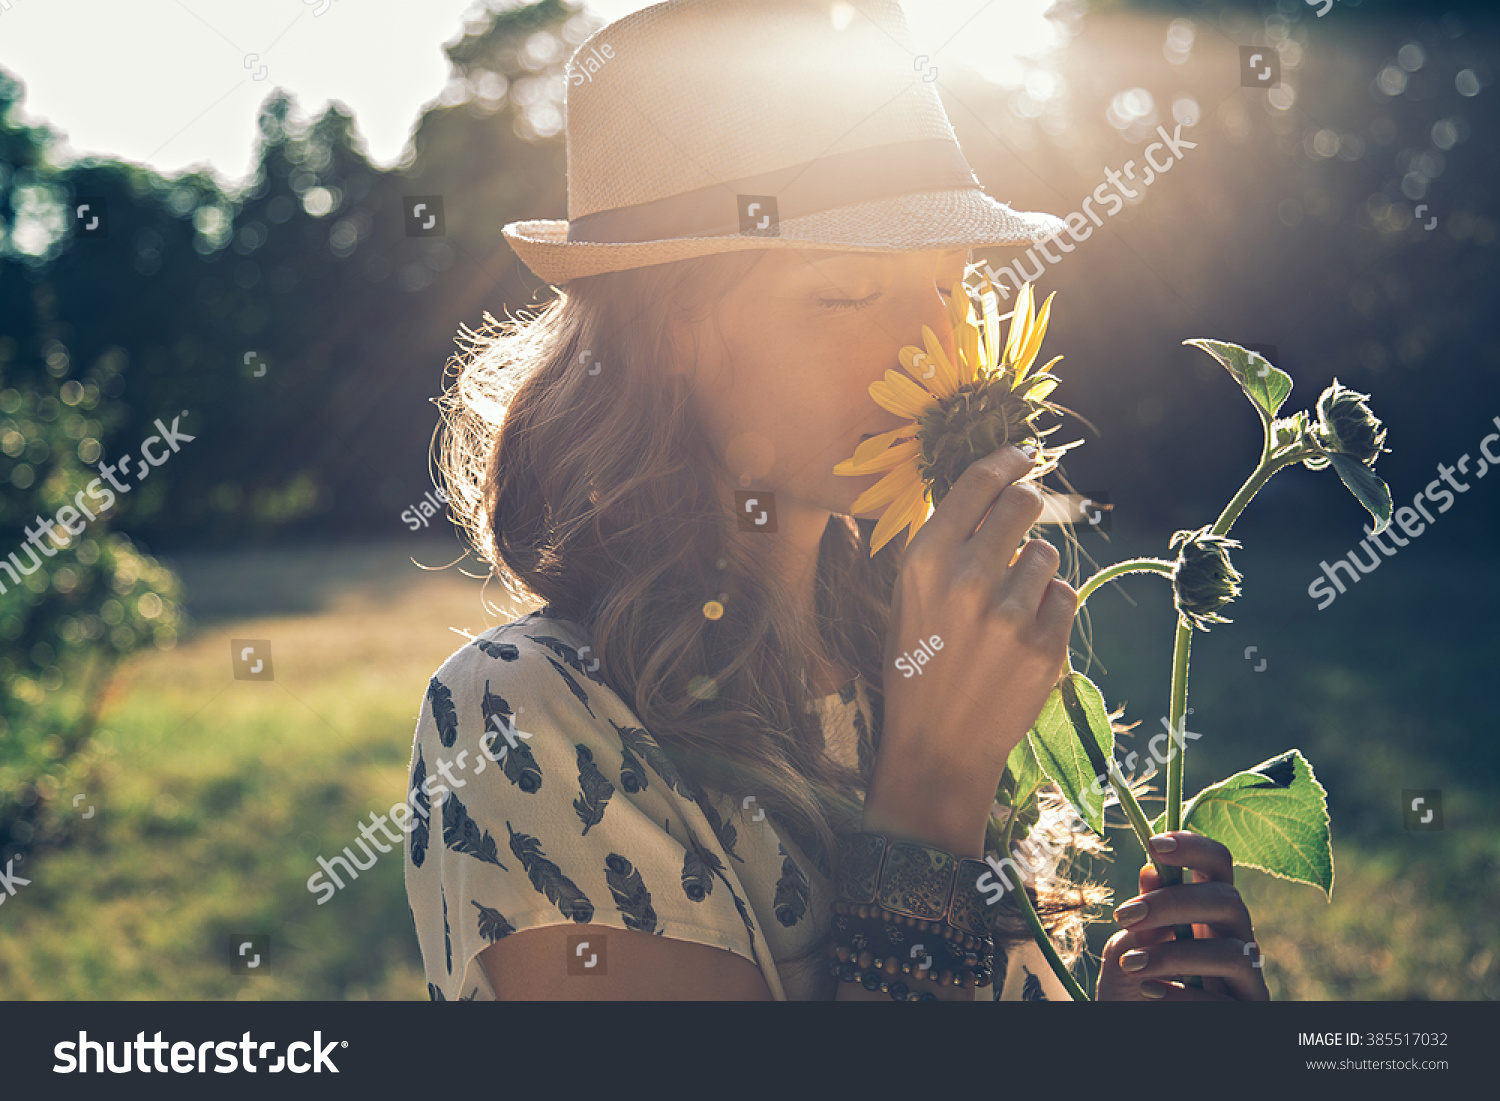 Girl smells sunflower in nature #385517032